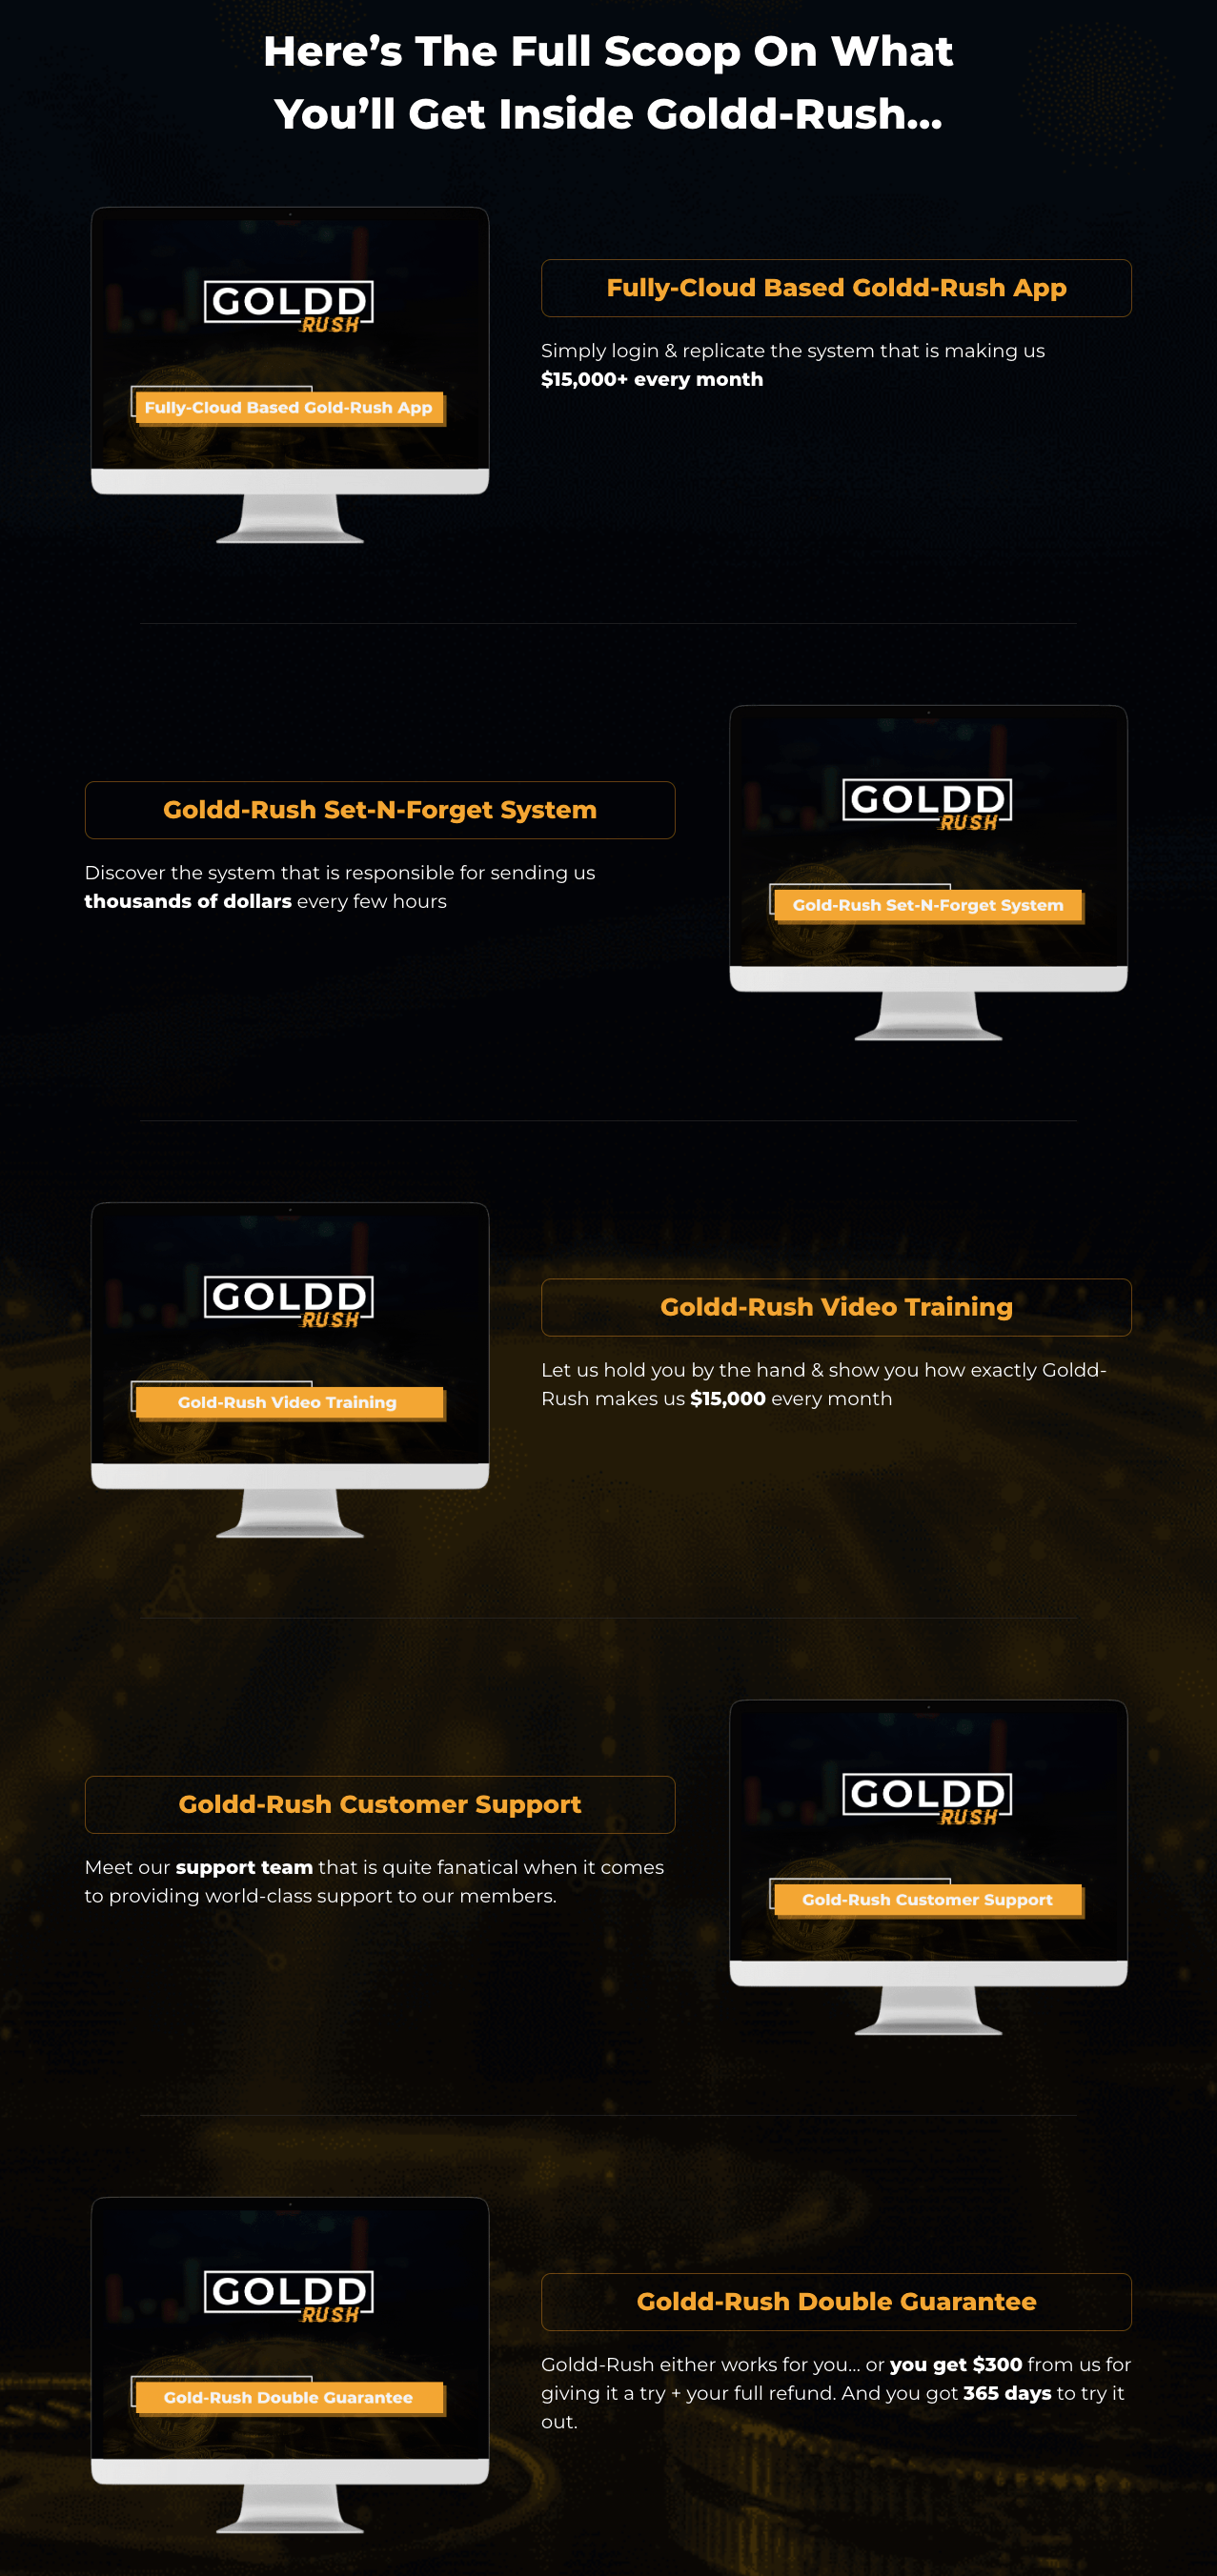 GolddRush-Features